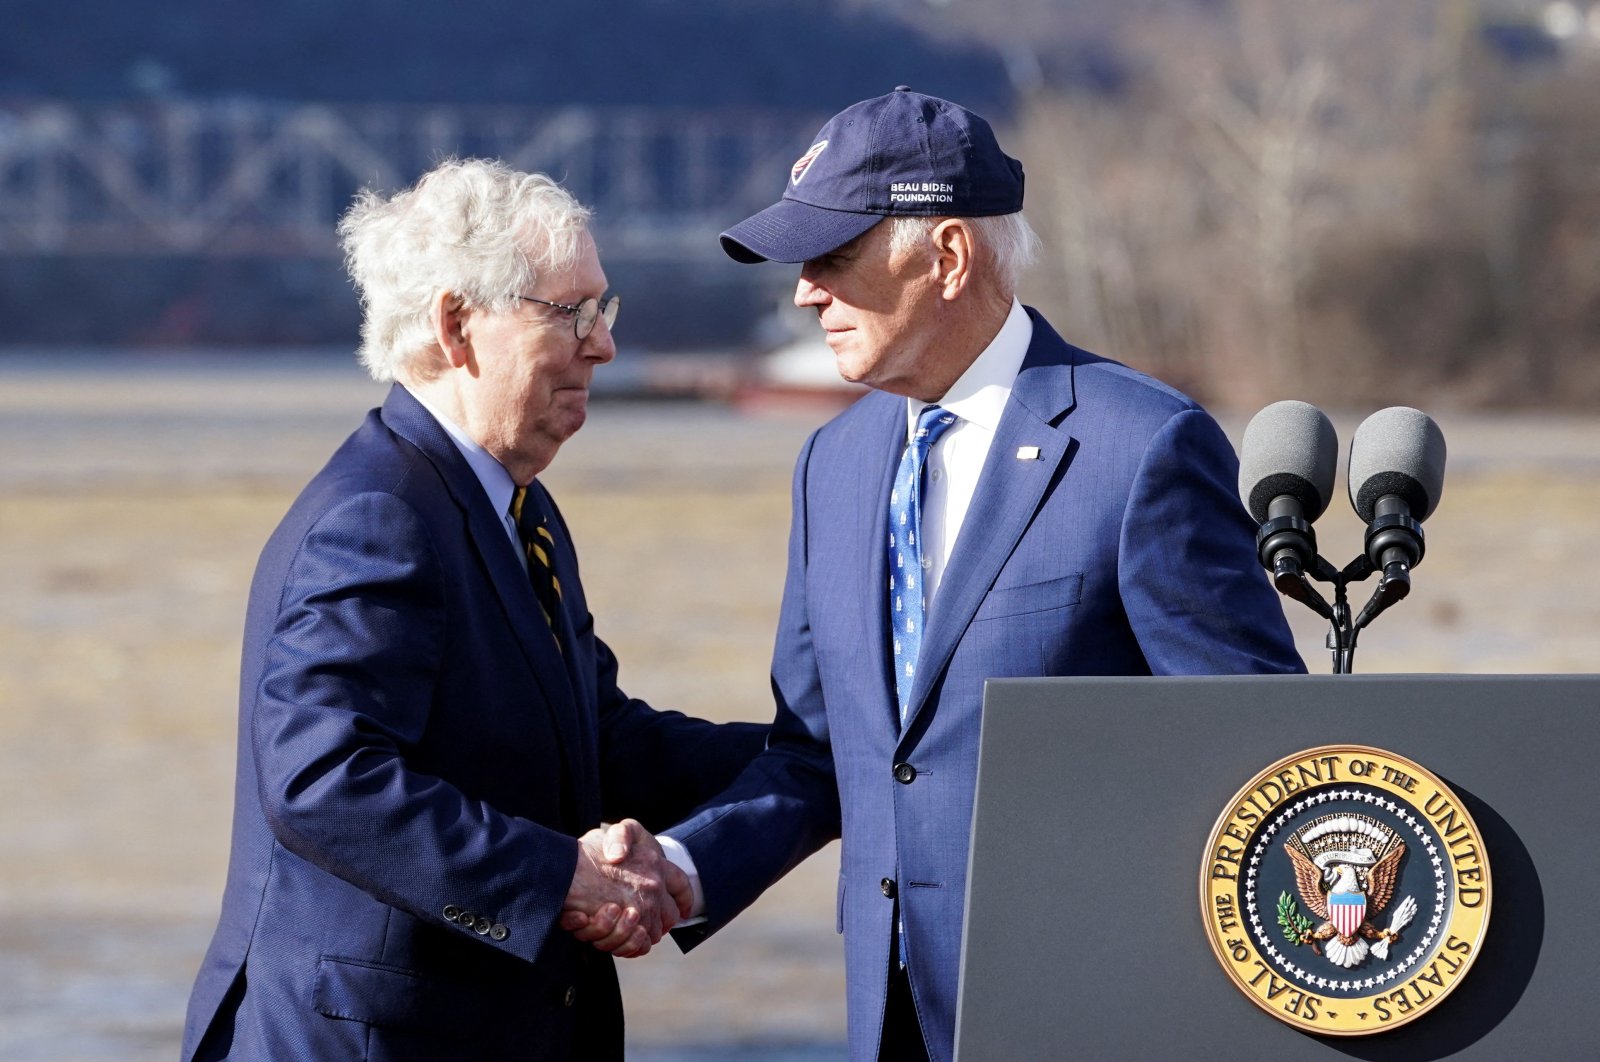 U.S. President Joe Biden shakes hands with U.S. Senate Republican Leader Mitch McConnell at an event, Kentucky, U.S., Jan. 4, 2023. (Reuters Photo)